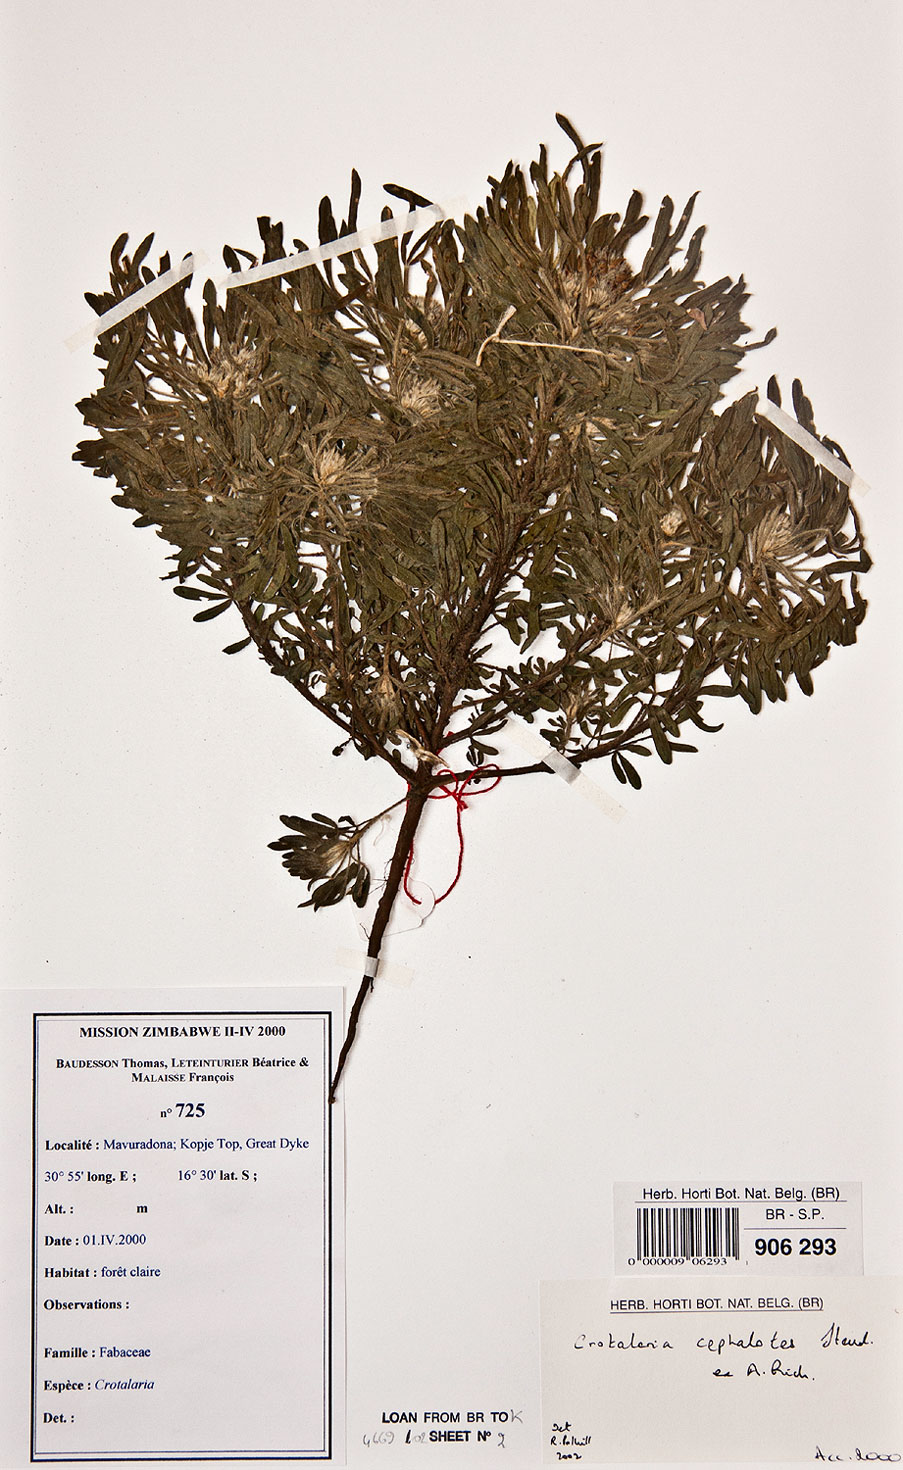 Crotalaria cephalotes